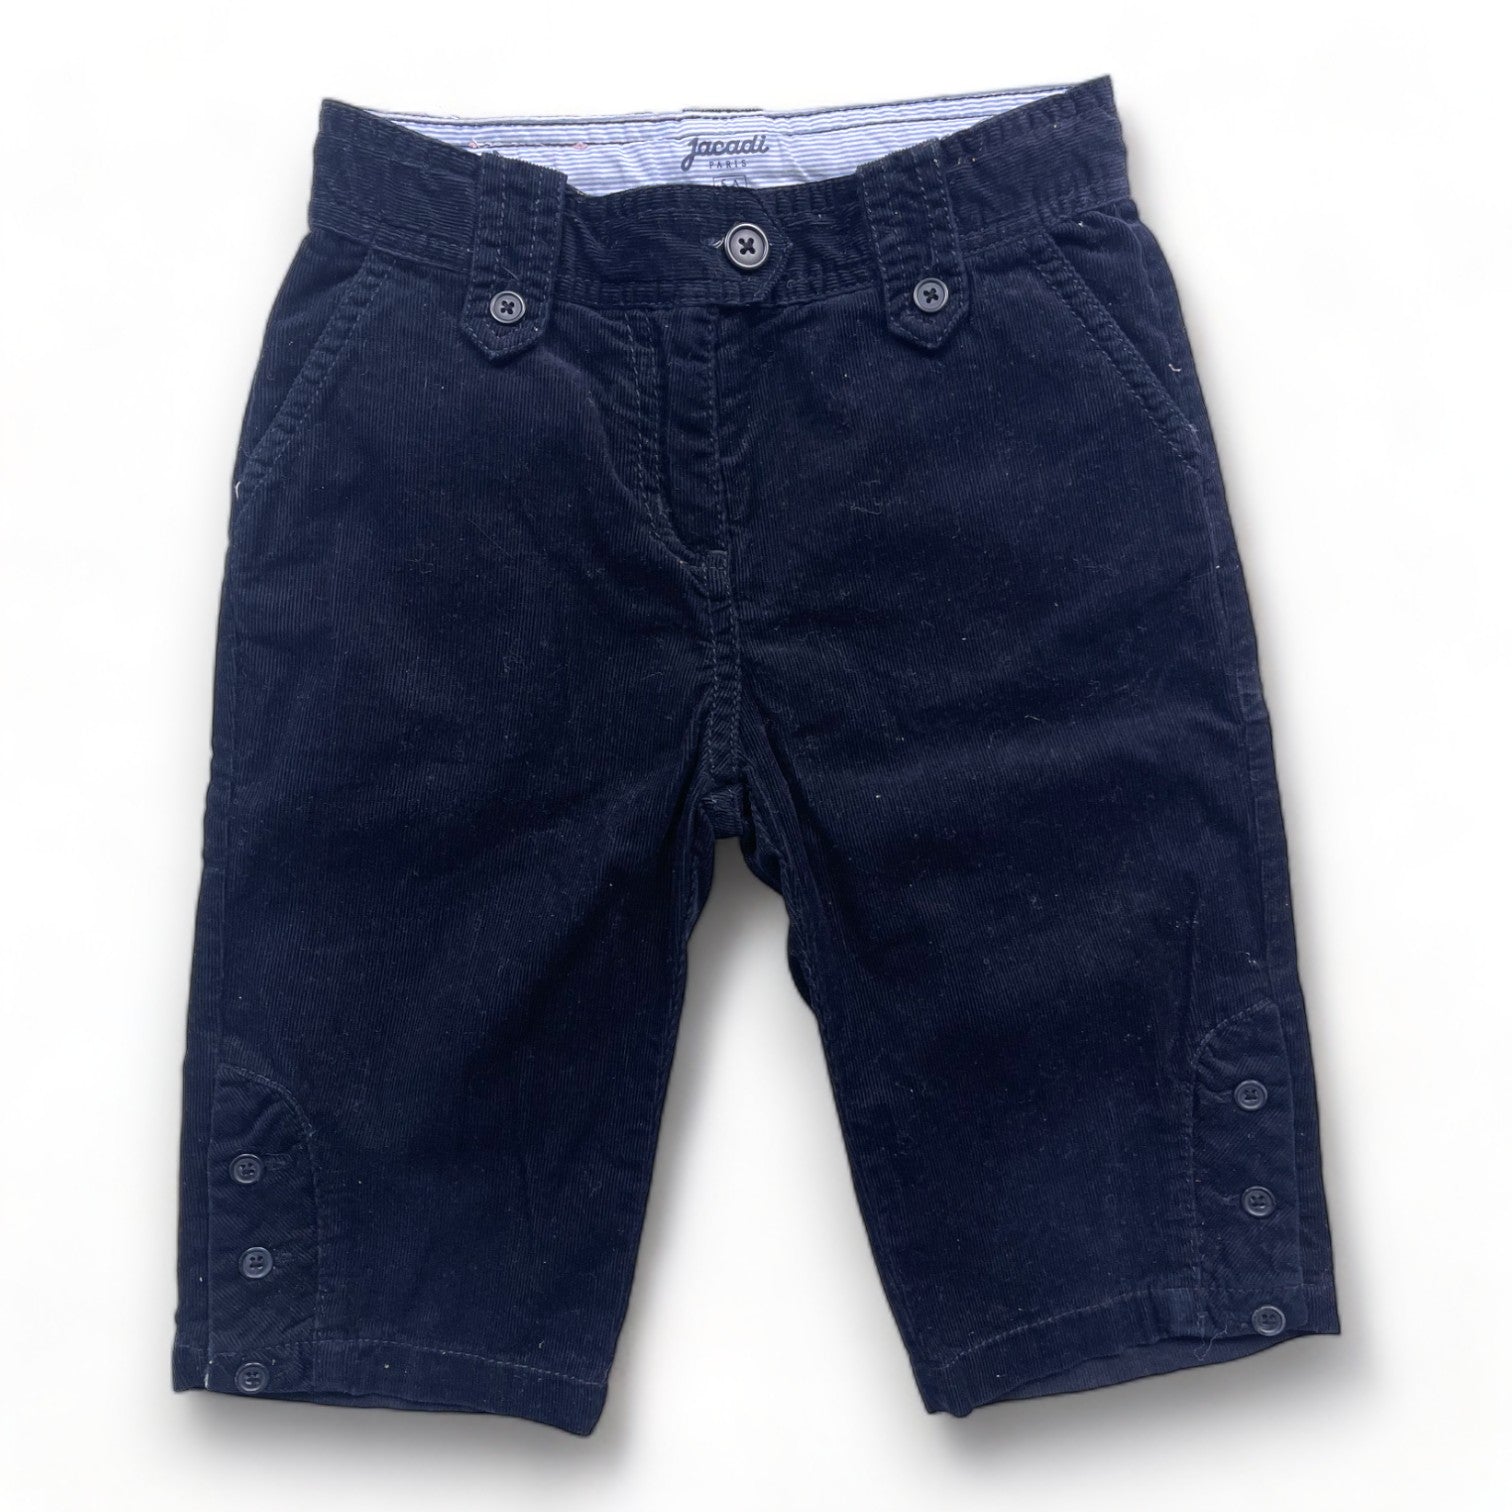 JACADI - Pantalon en velours bleu marine - 5 ans